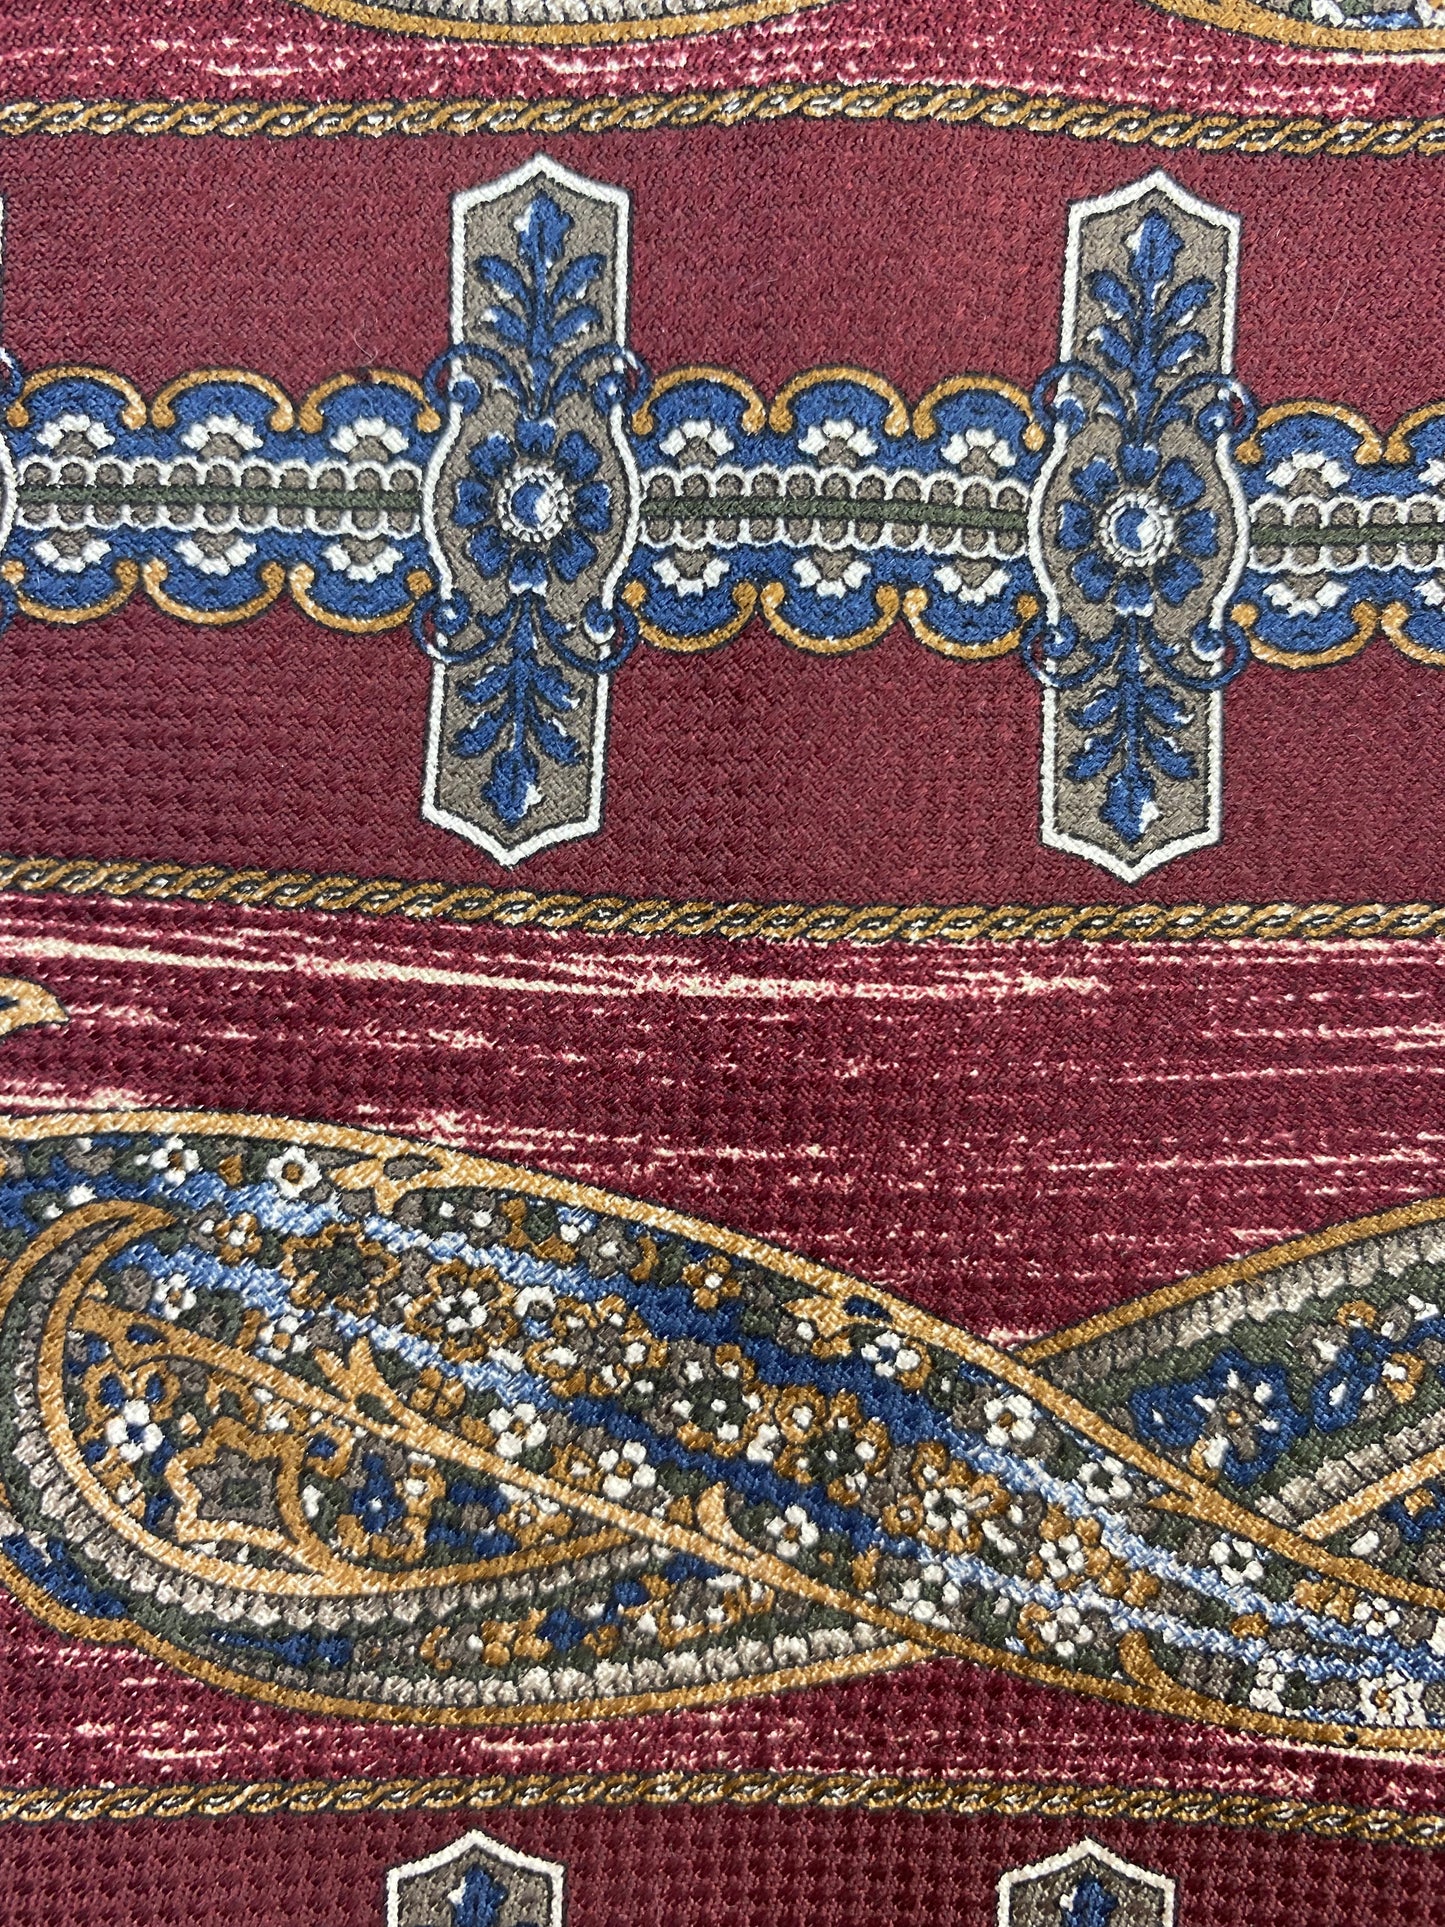 90s Deadstock Silk Necktie, Men's Vintage Wine/ Blue Abstract Indian Pattern Tie, NOS